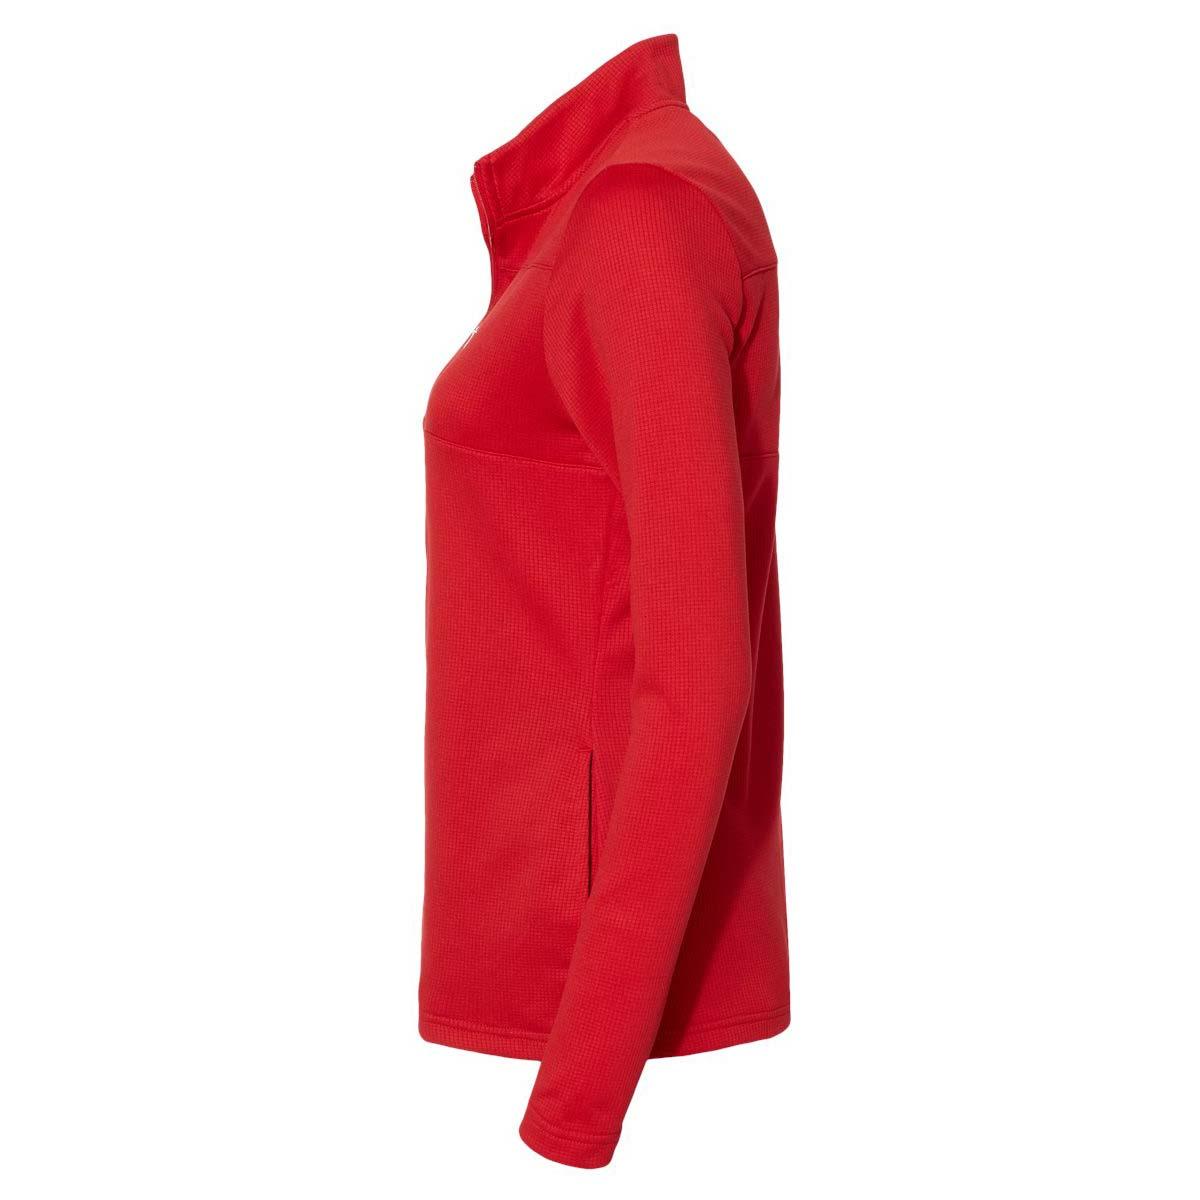 Adidas Women's Team Collegiate Red / Grey Two 3-Stripes Double Knit  Full-Zip Sweatshirt